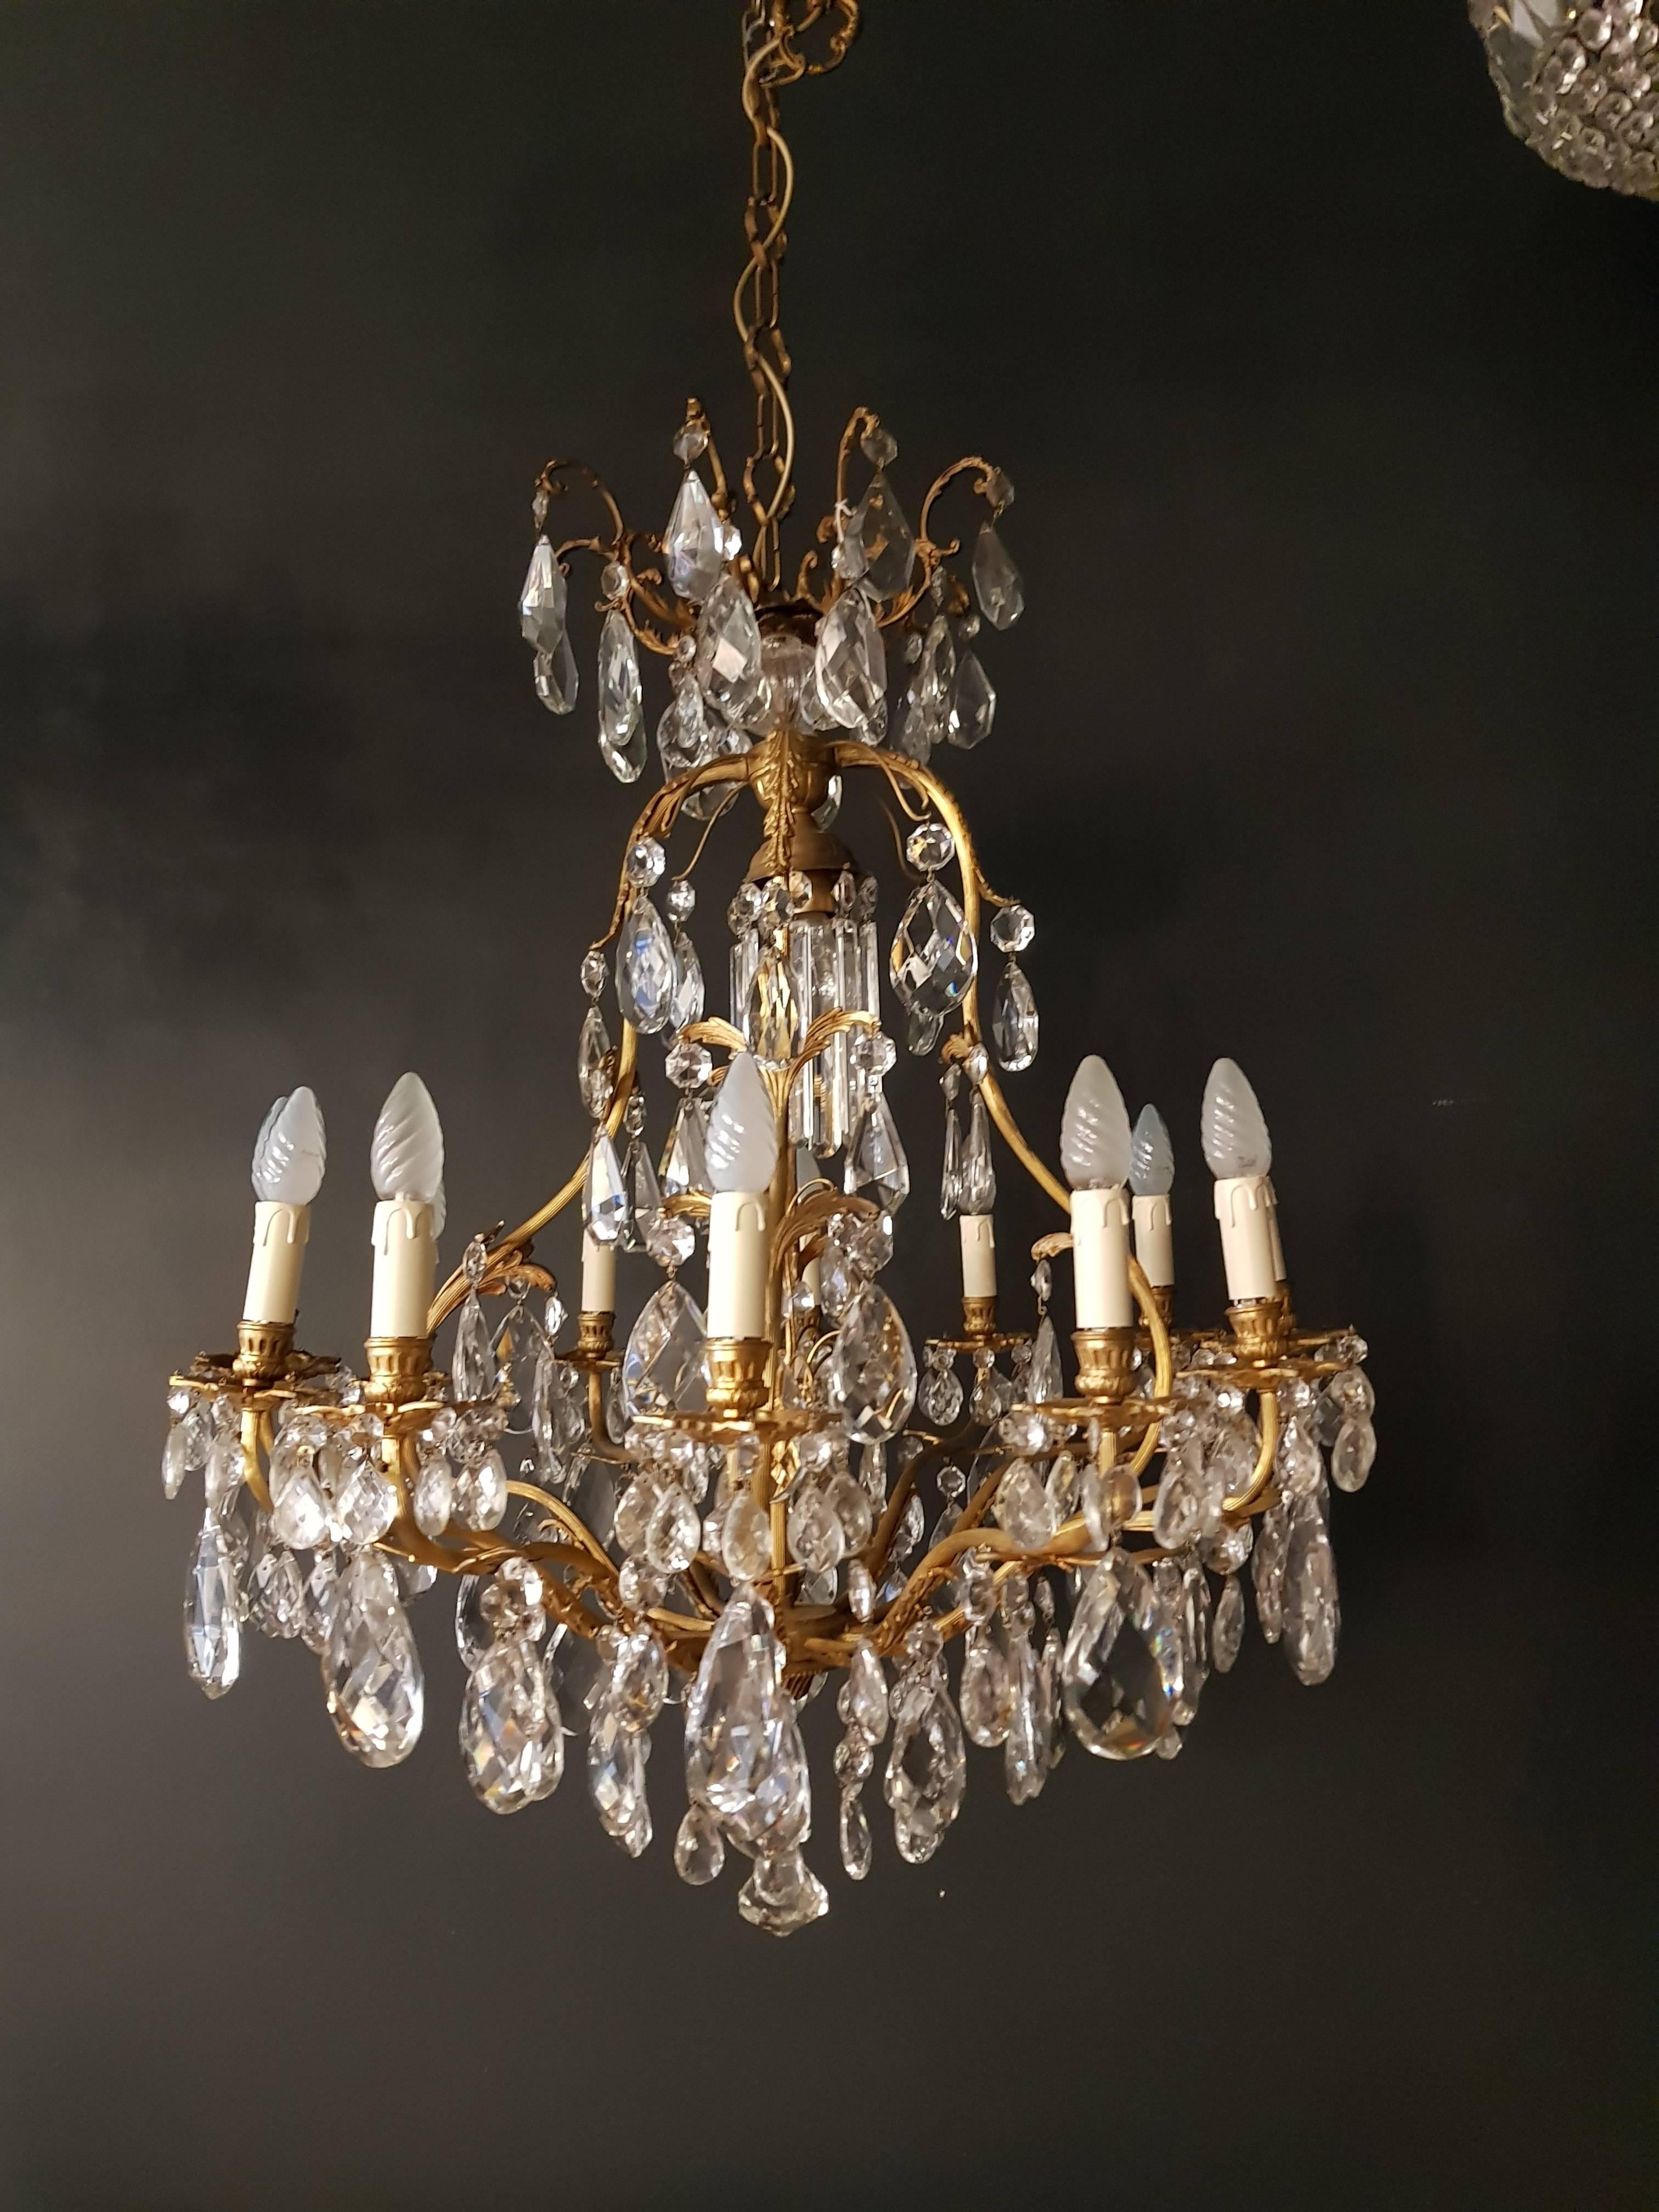 Austrian Crystal Chandelier Antique Ceiling Lamp Lustre